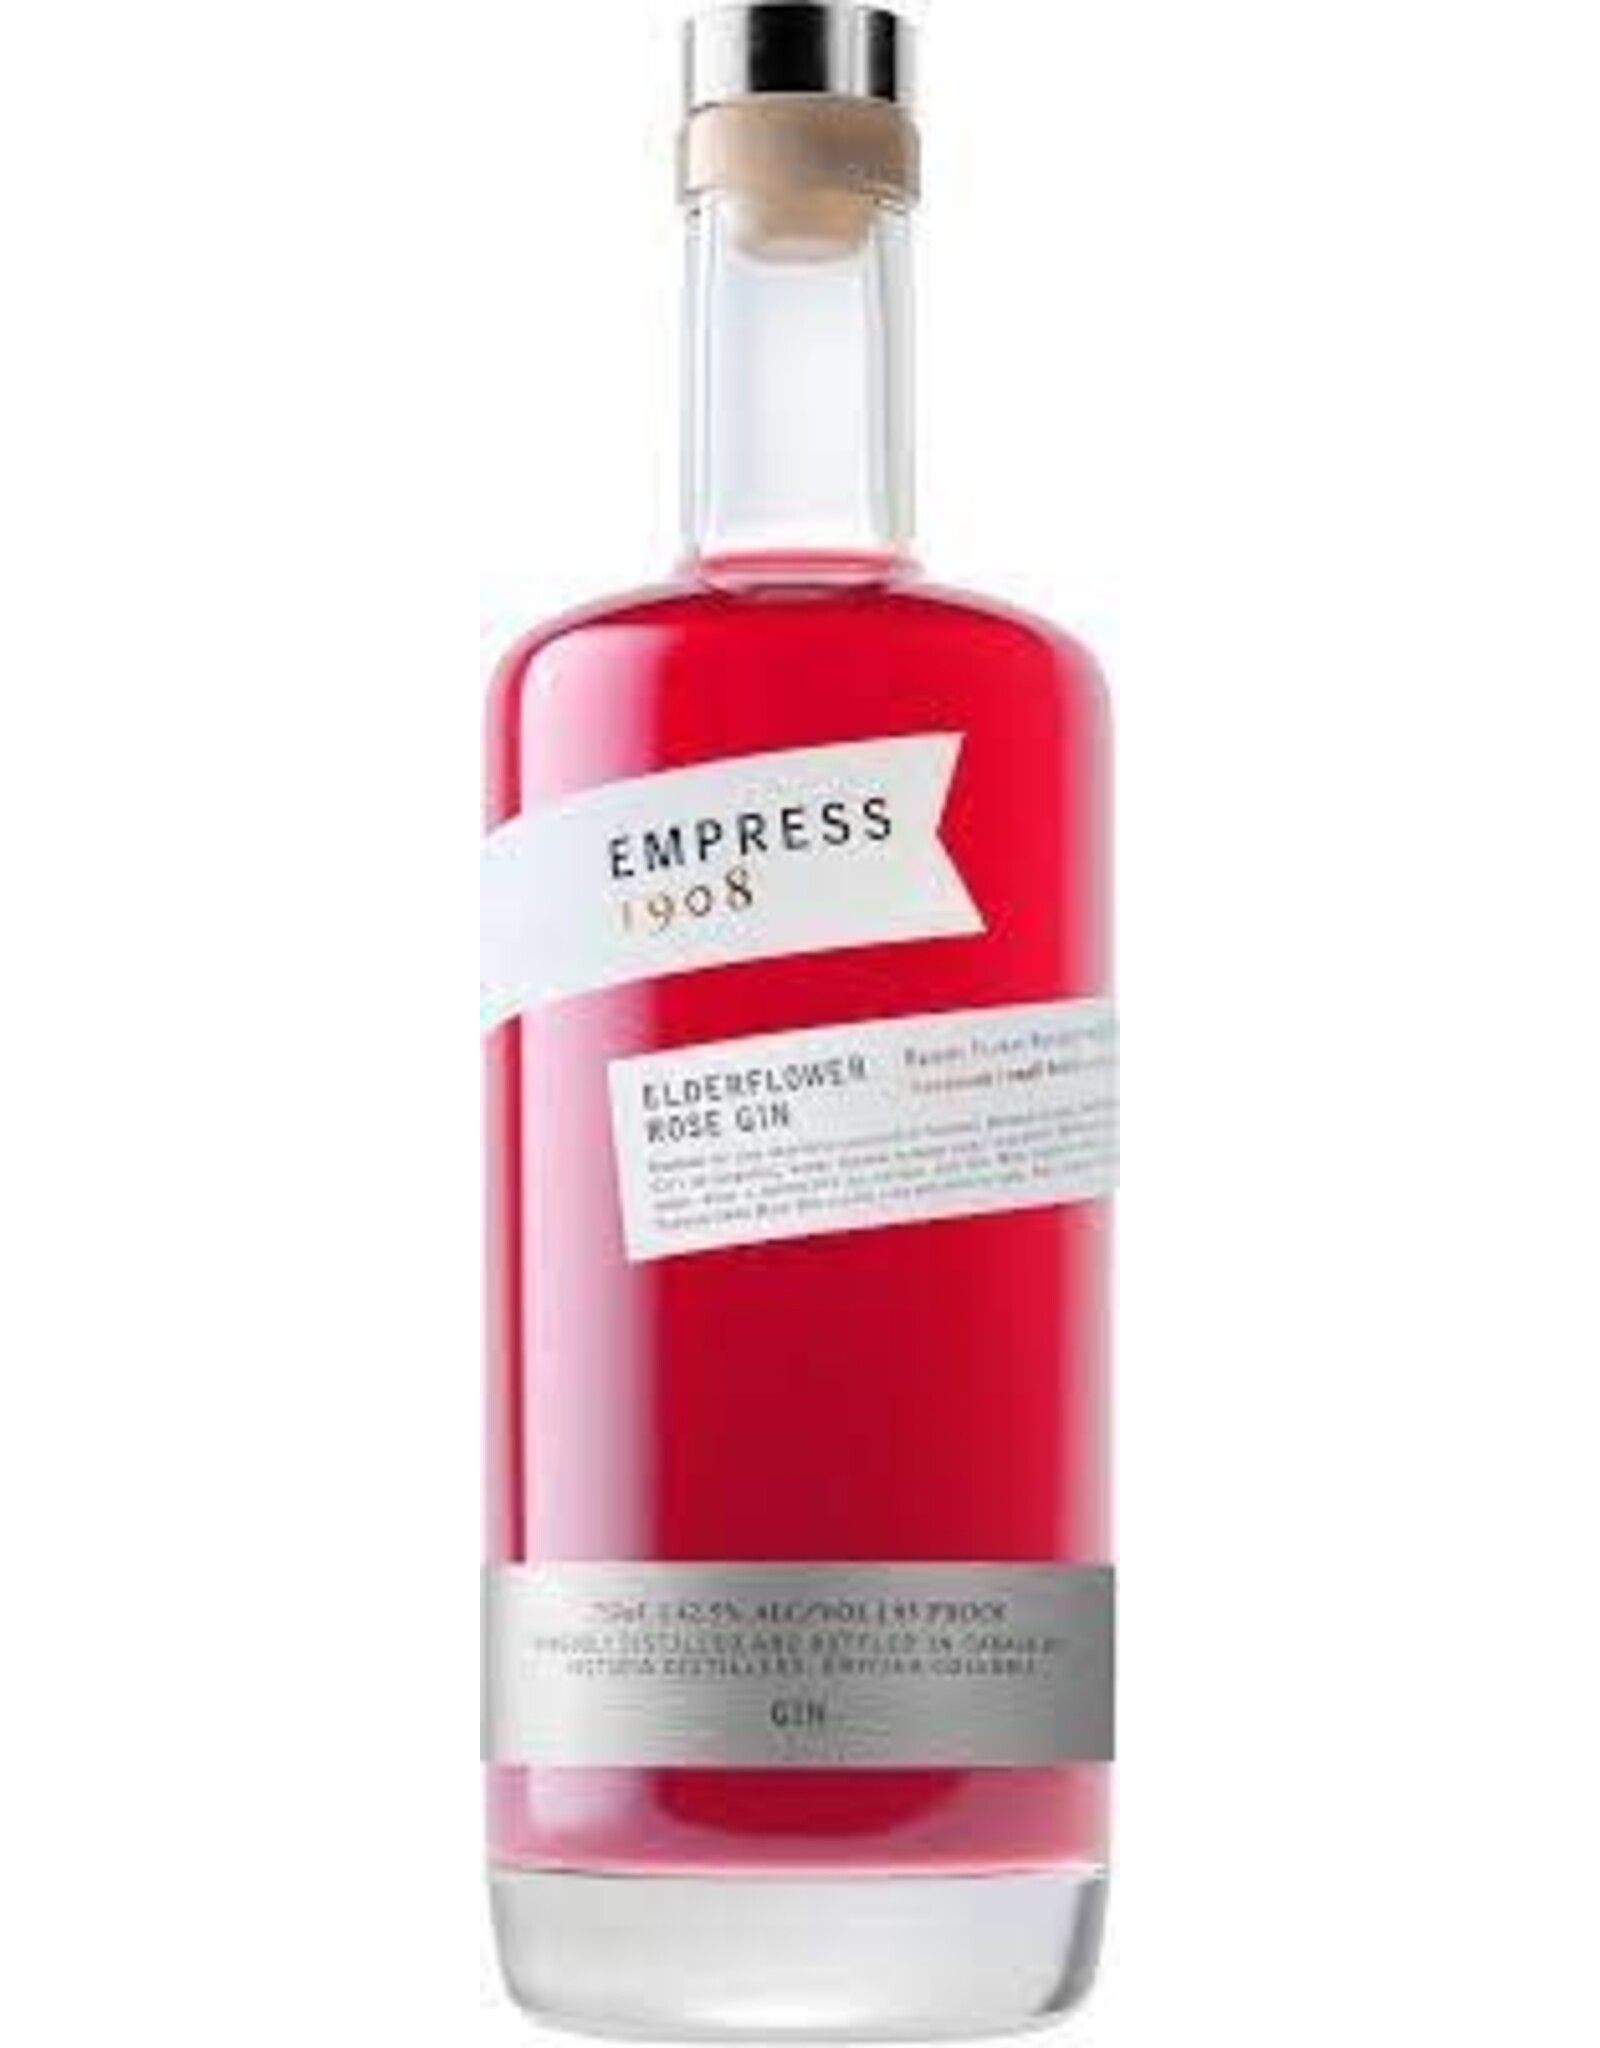 EMPRESS ELDERFLOWER ROSE GIN 750ML